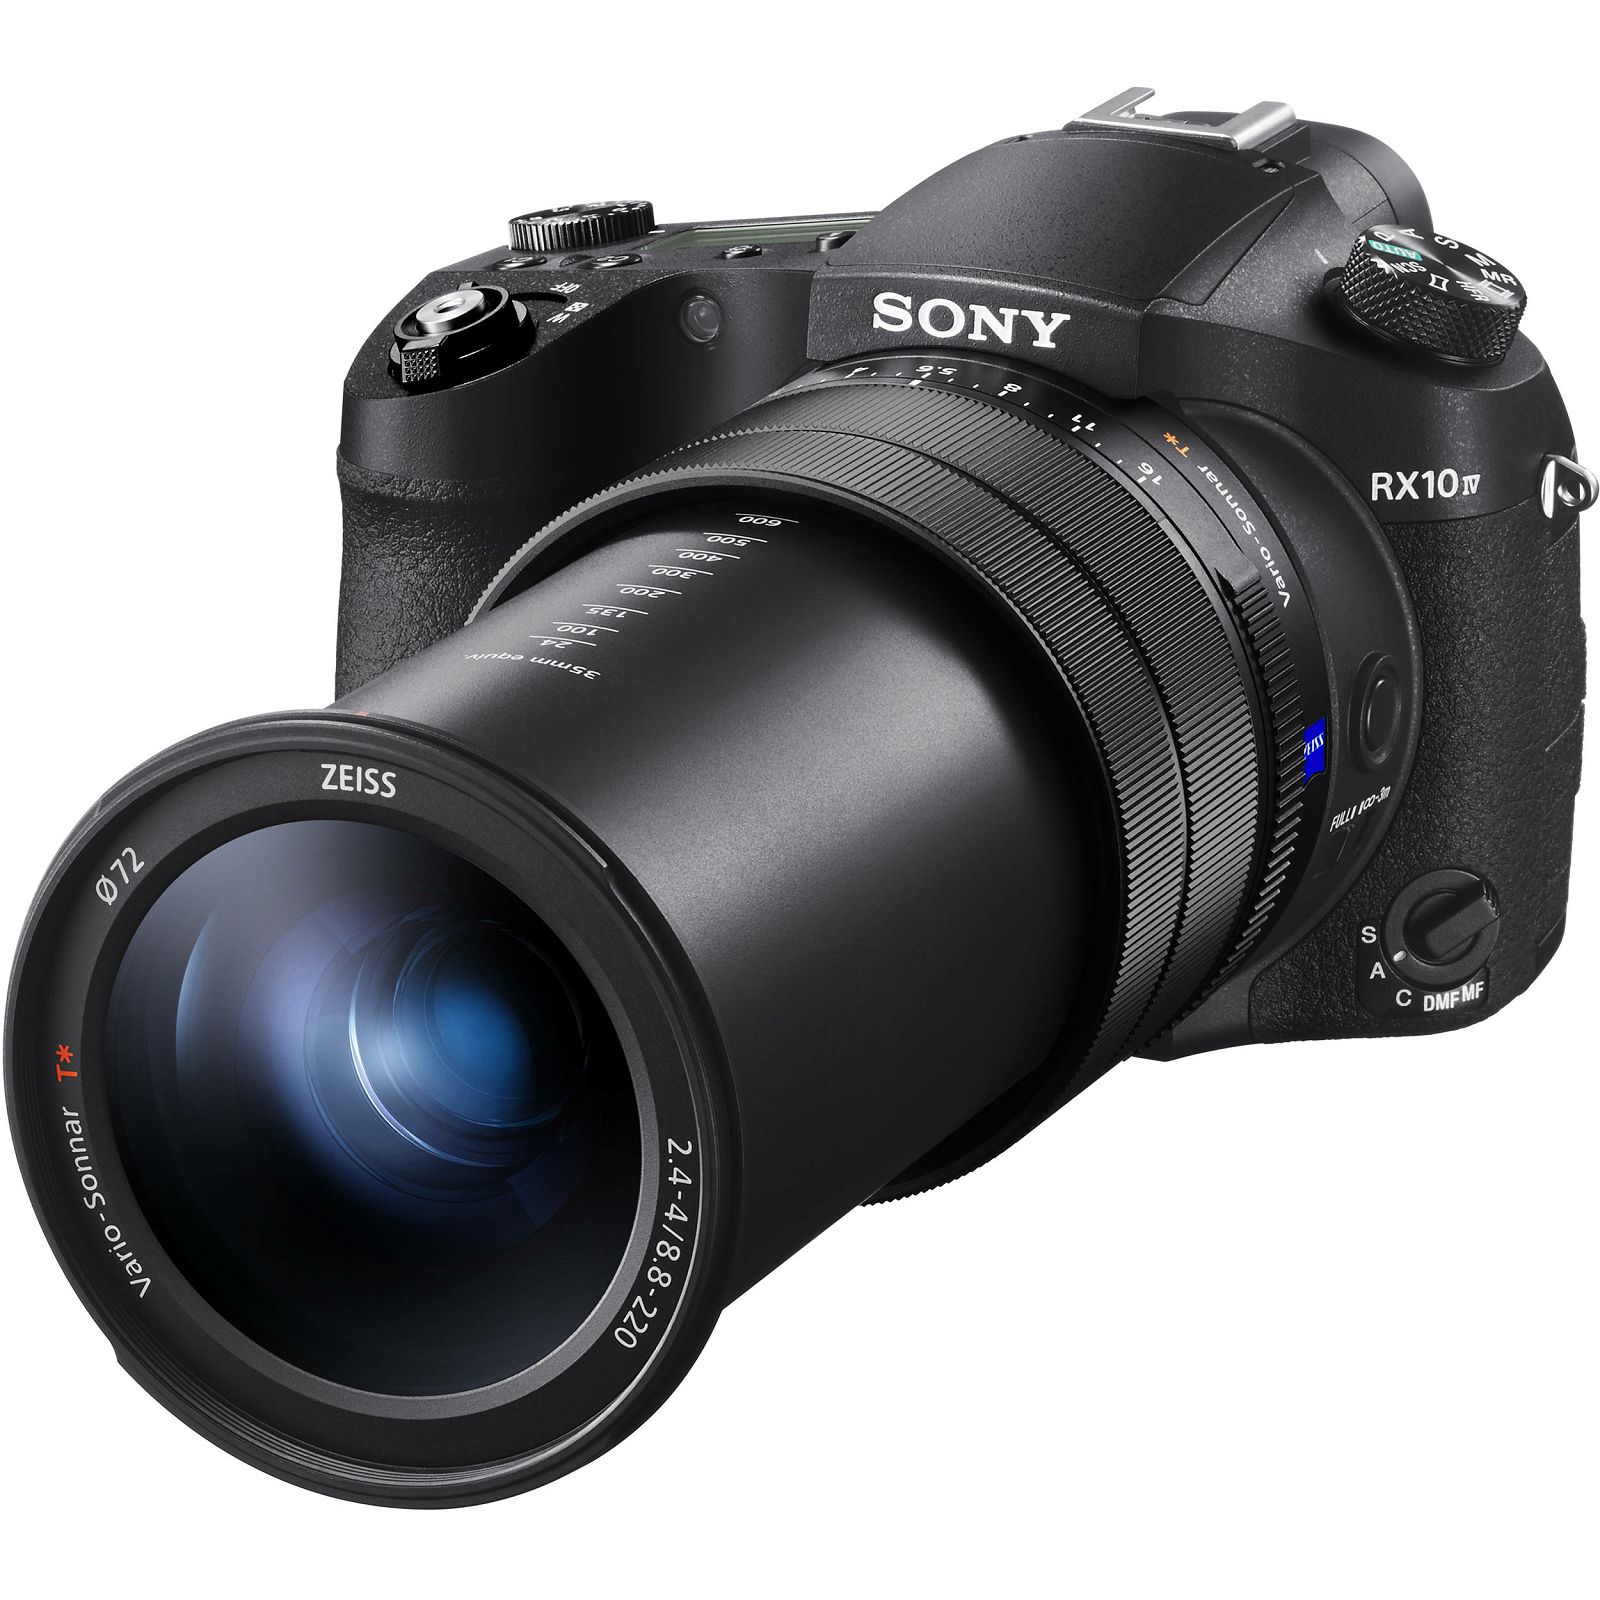 Sony Cyber-shot DSC-RX10 IV kompaktni digitalni fotoaparat s integriranim objektivom Carl Zeiss Vario-Sonnar T* 8.8-220mm f/2.4-4.8 Digital Camera